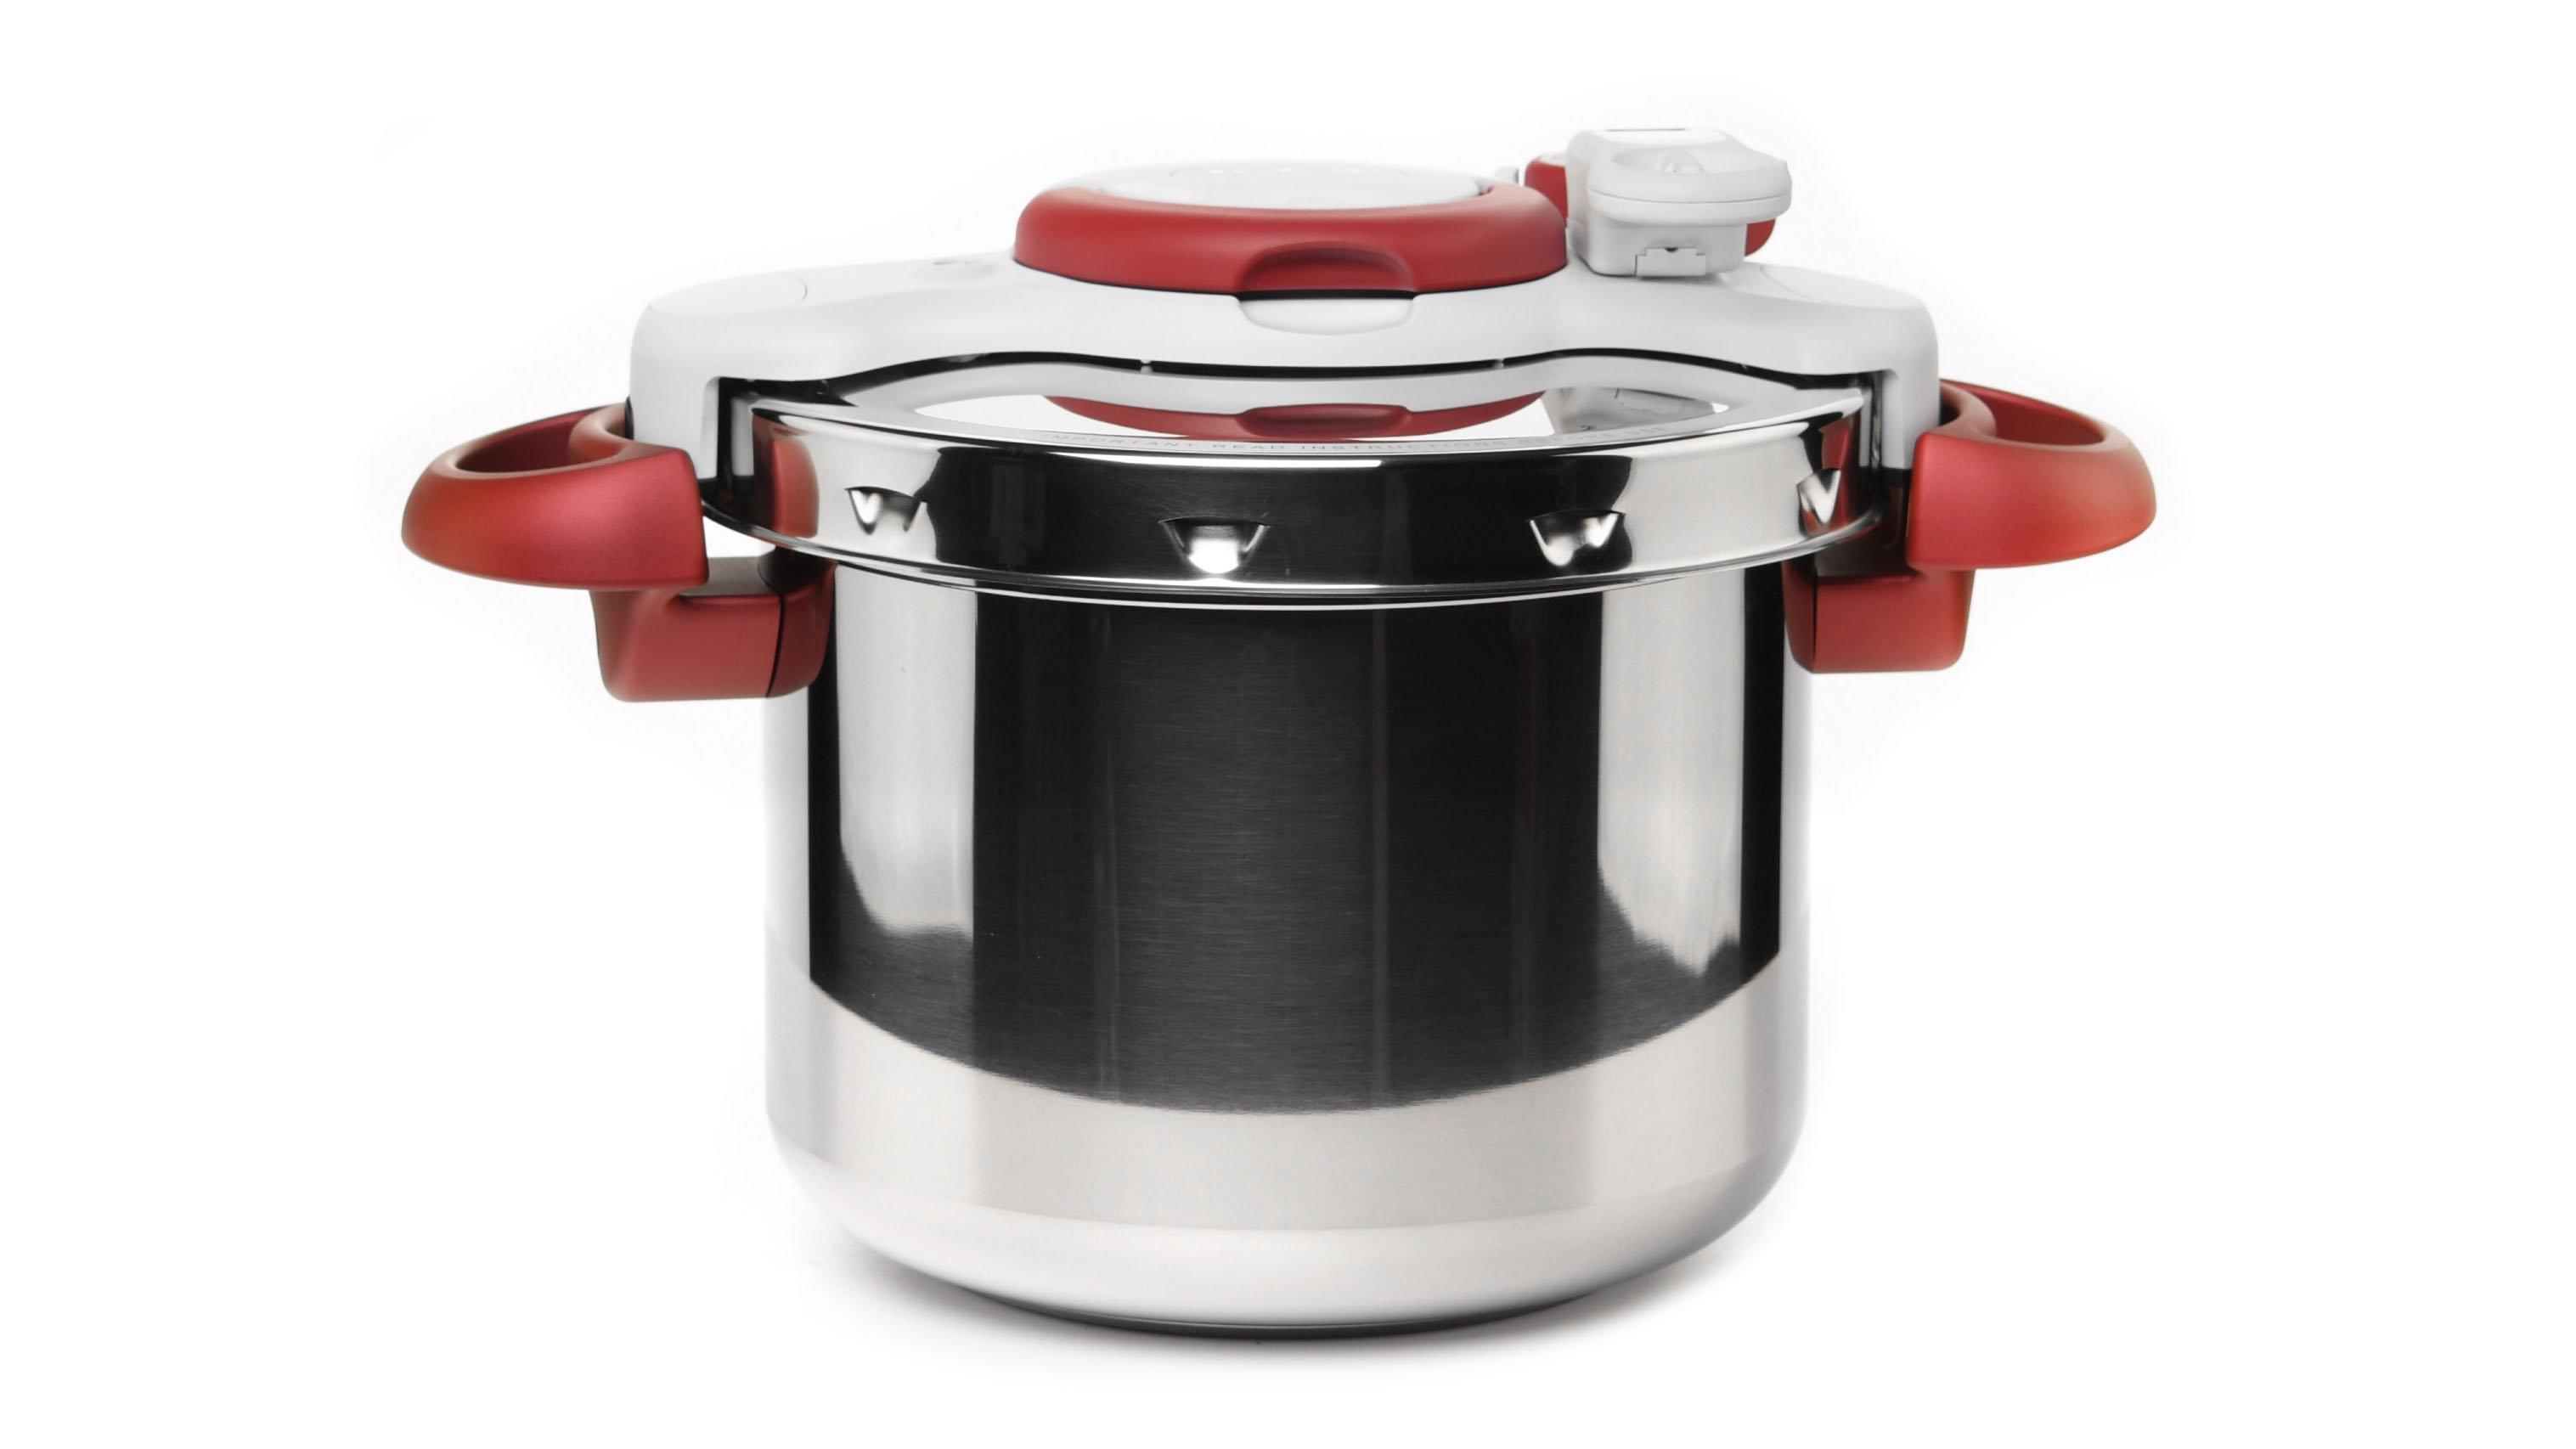 Buy Tefal Pressue Cooker Cocotte-Minute 12 Liters Online